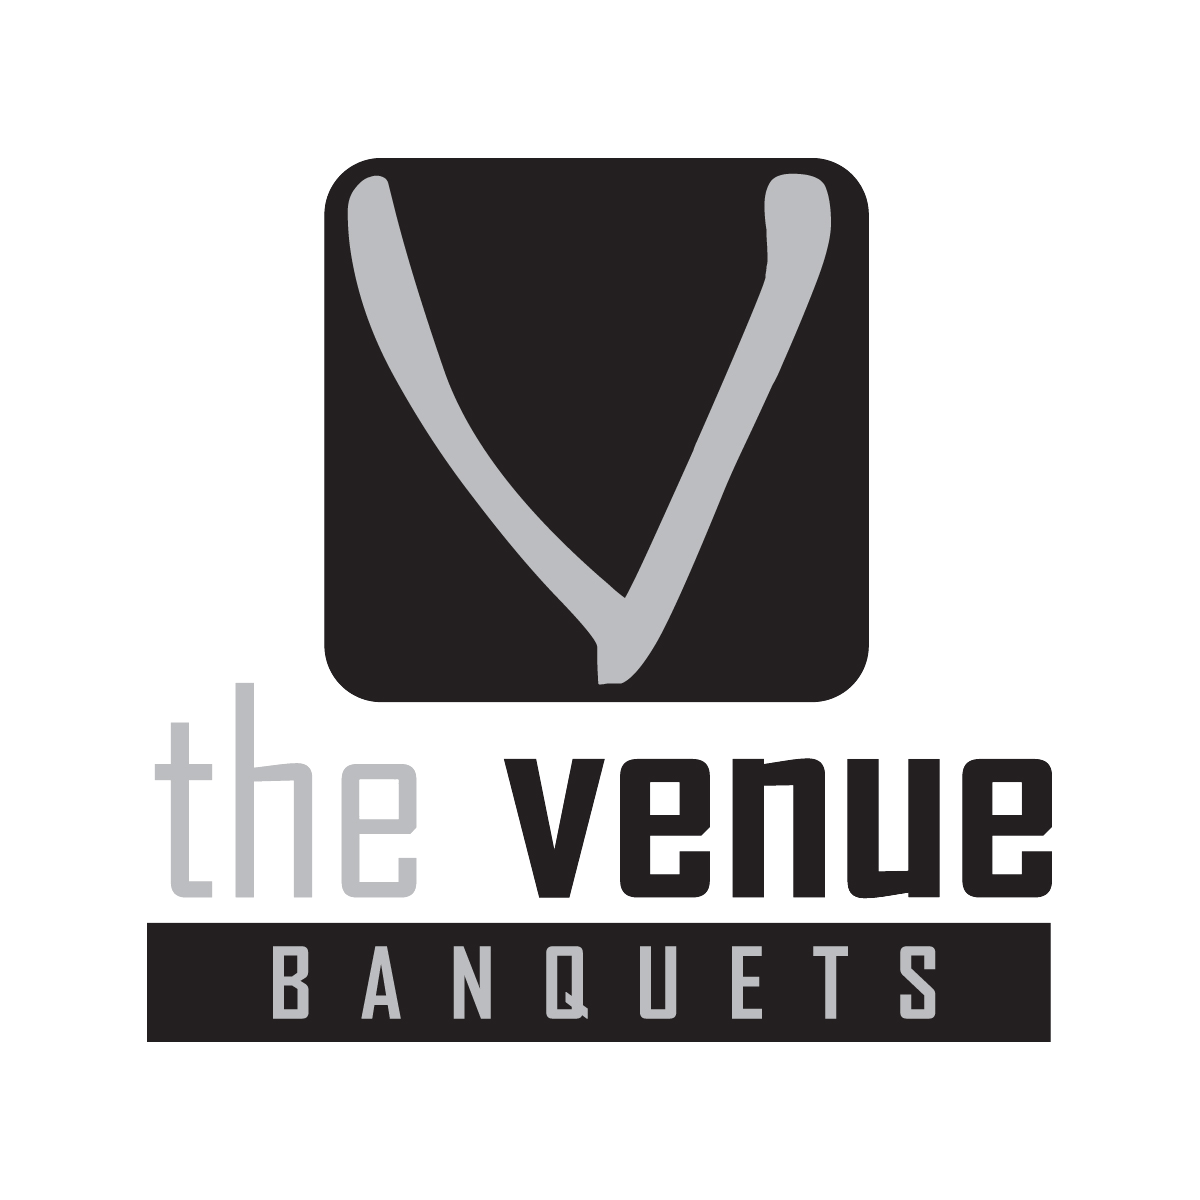 The Venue Banquets